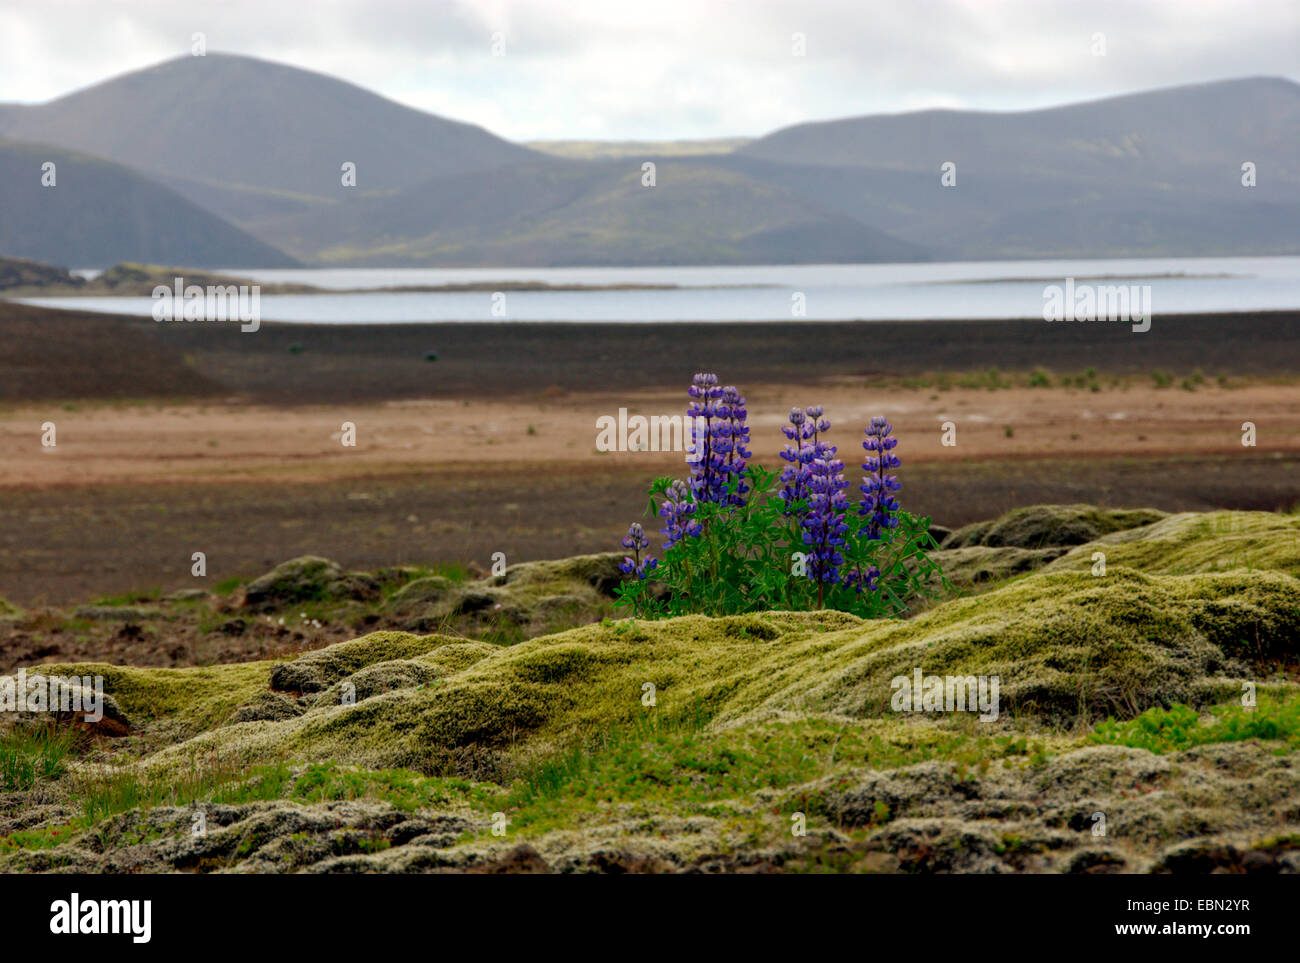 Nootka lupine, Alaska lupine (Lupinus nootkatensis), in front of mountain landscape, Iceland, Reykjanes Peninsula Stock Photo